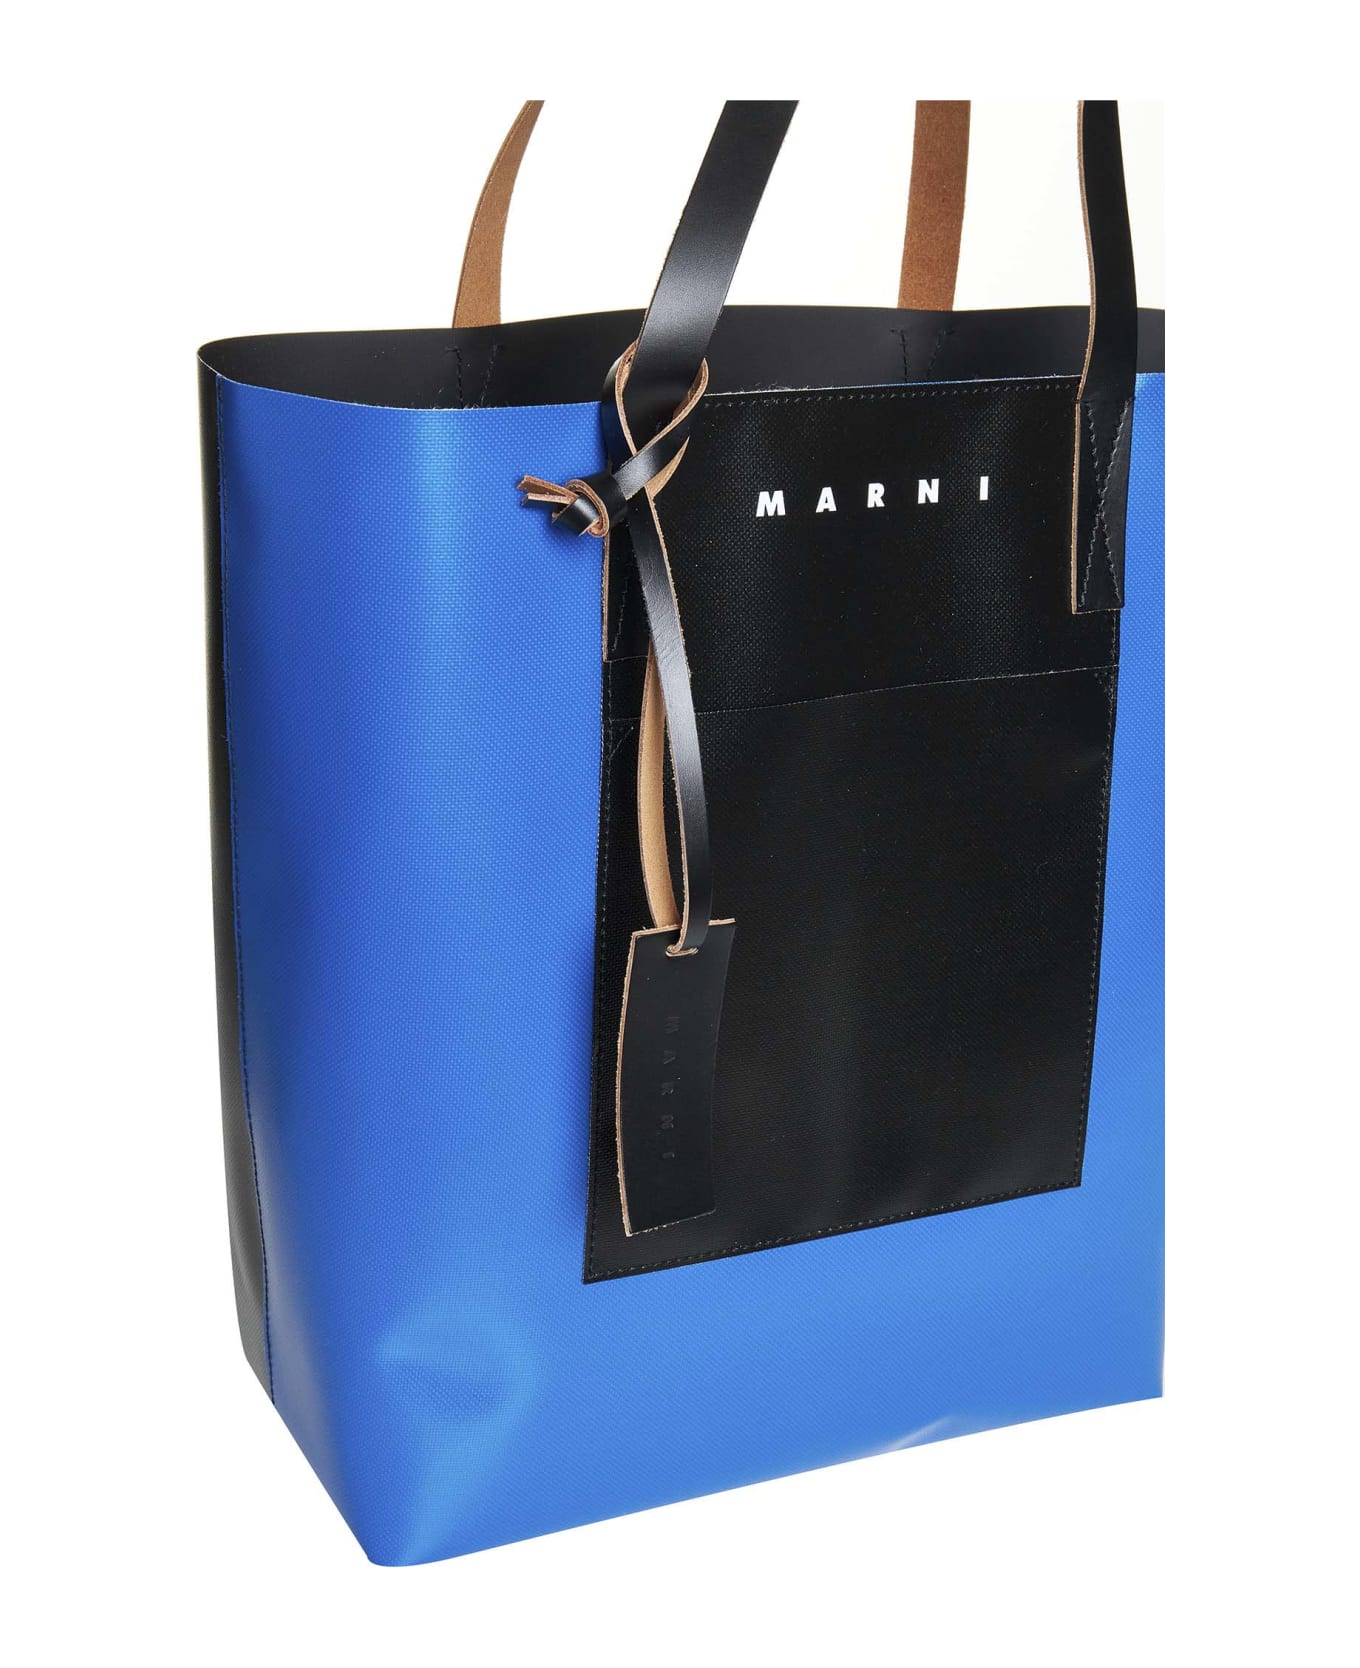 Marni Tribeca Shopping Bag - Royal black black